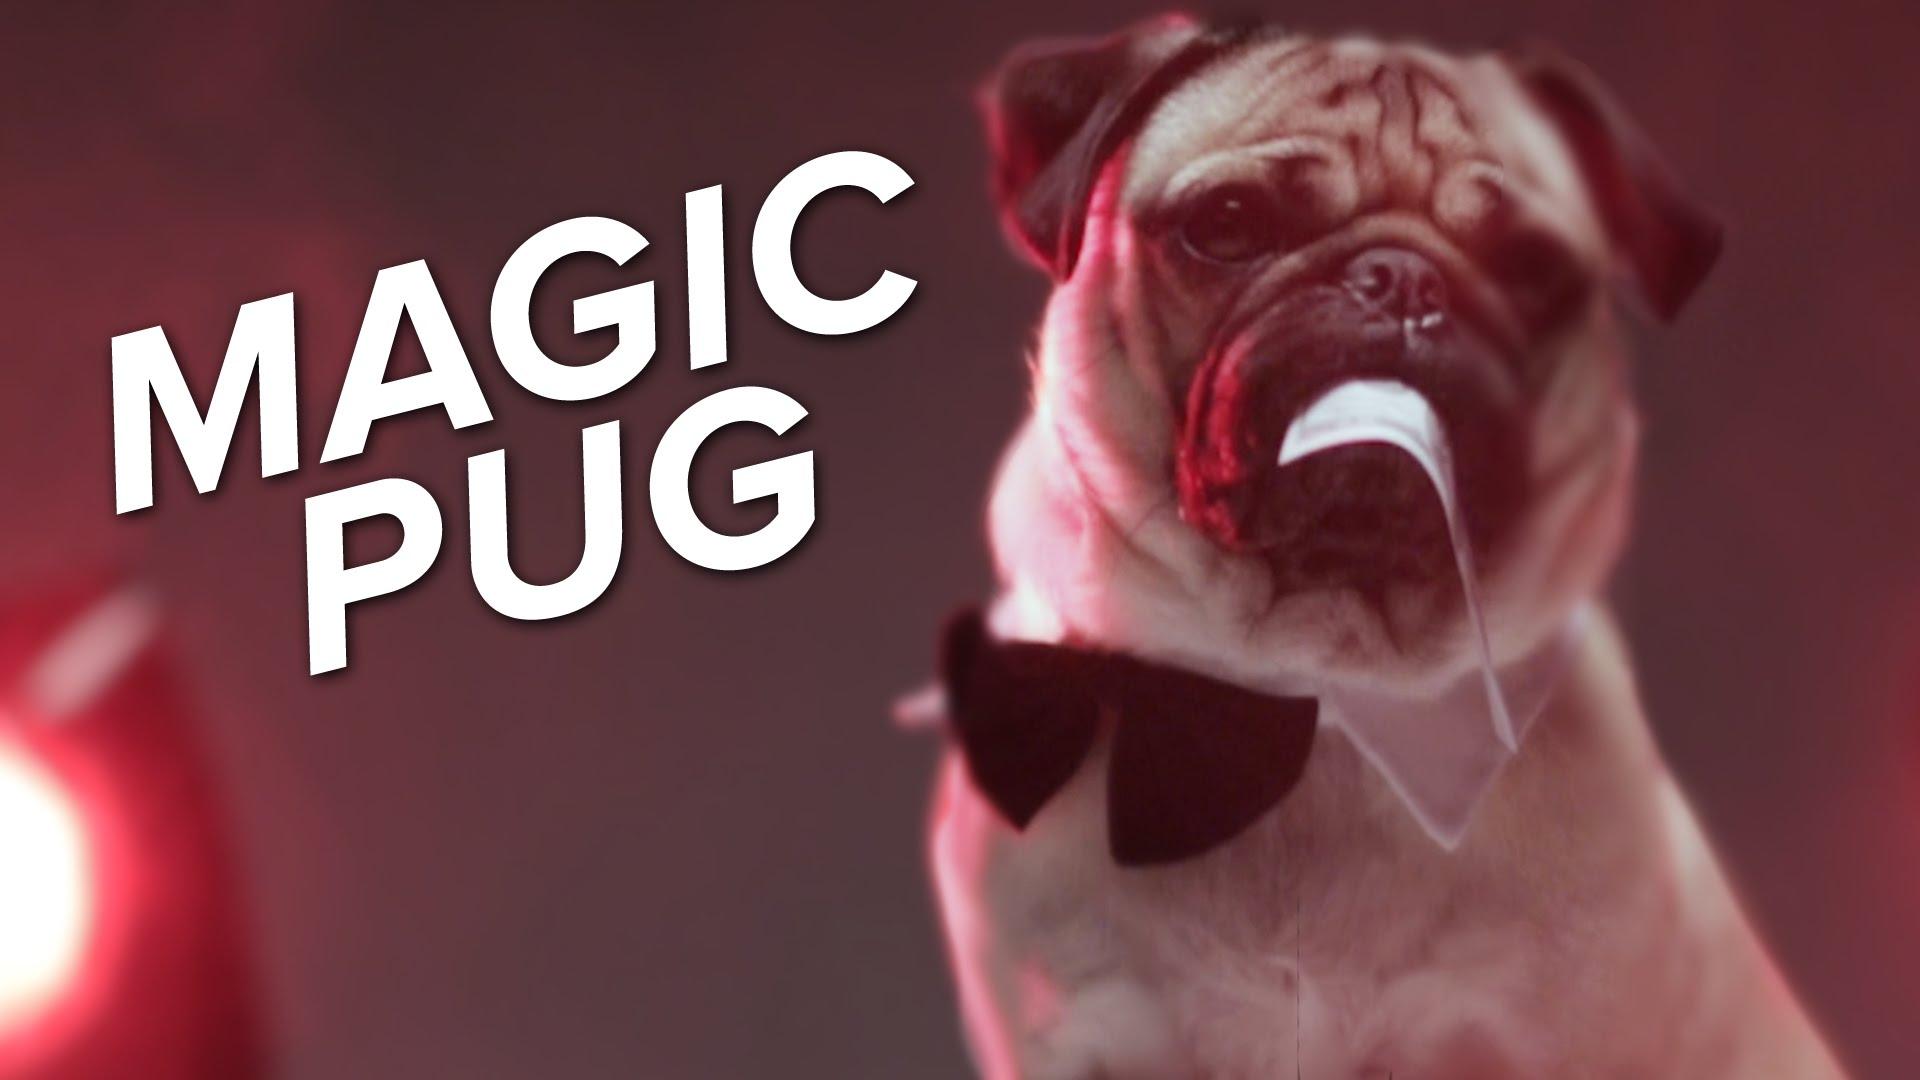 VIDEO Doug the Pug is for Halloween! For Peeps